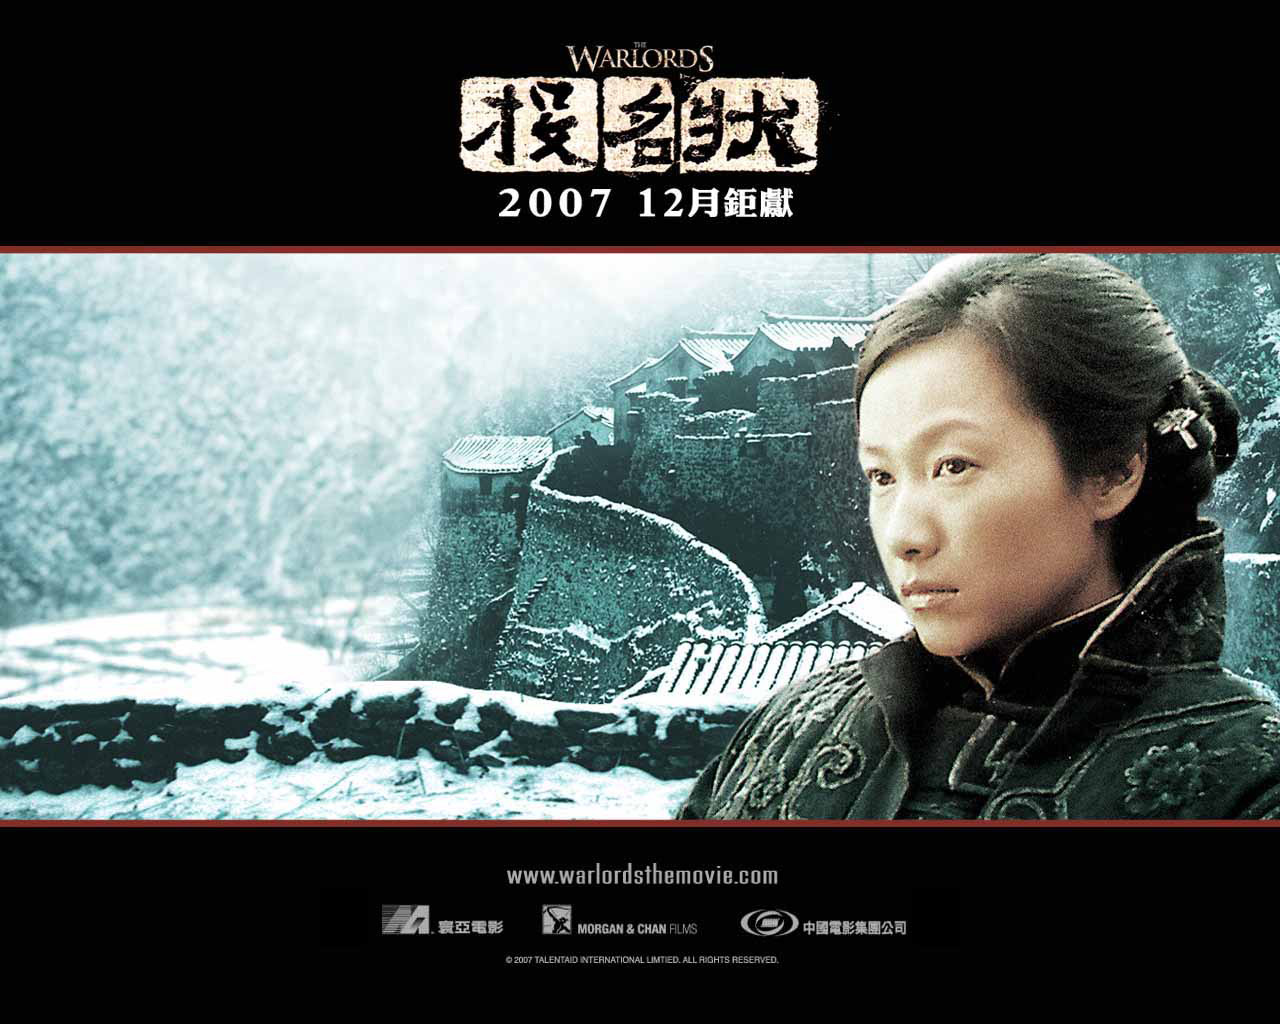 Download HQ Tau Ming Chong wallpaper / Movies / 1280x1024